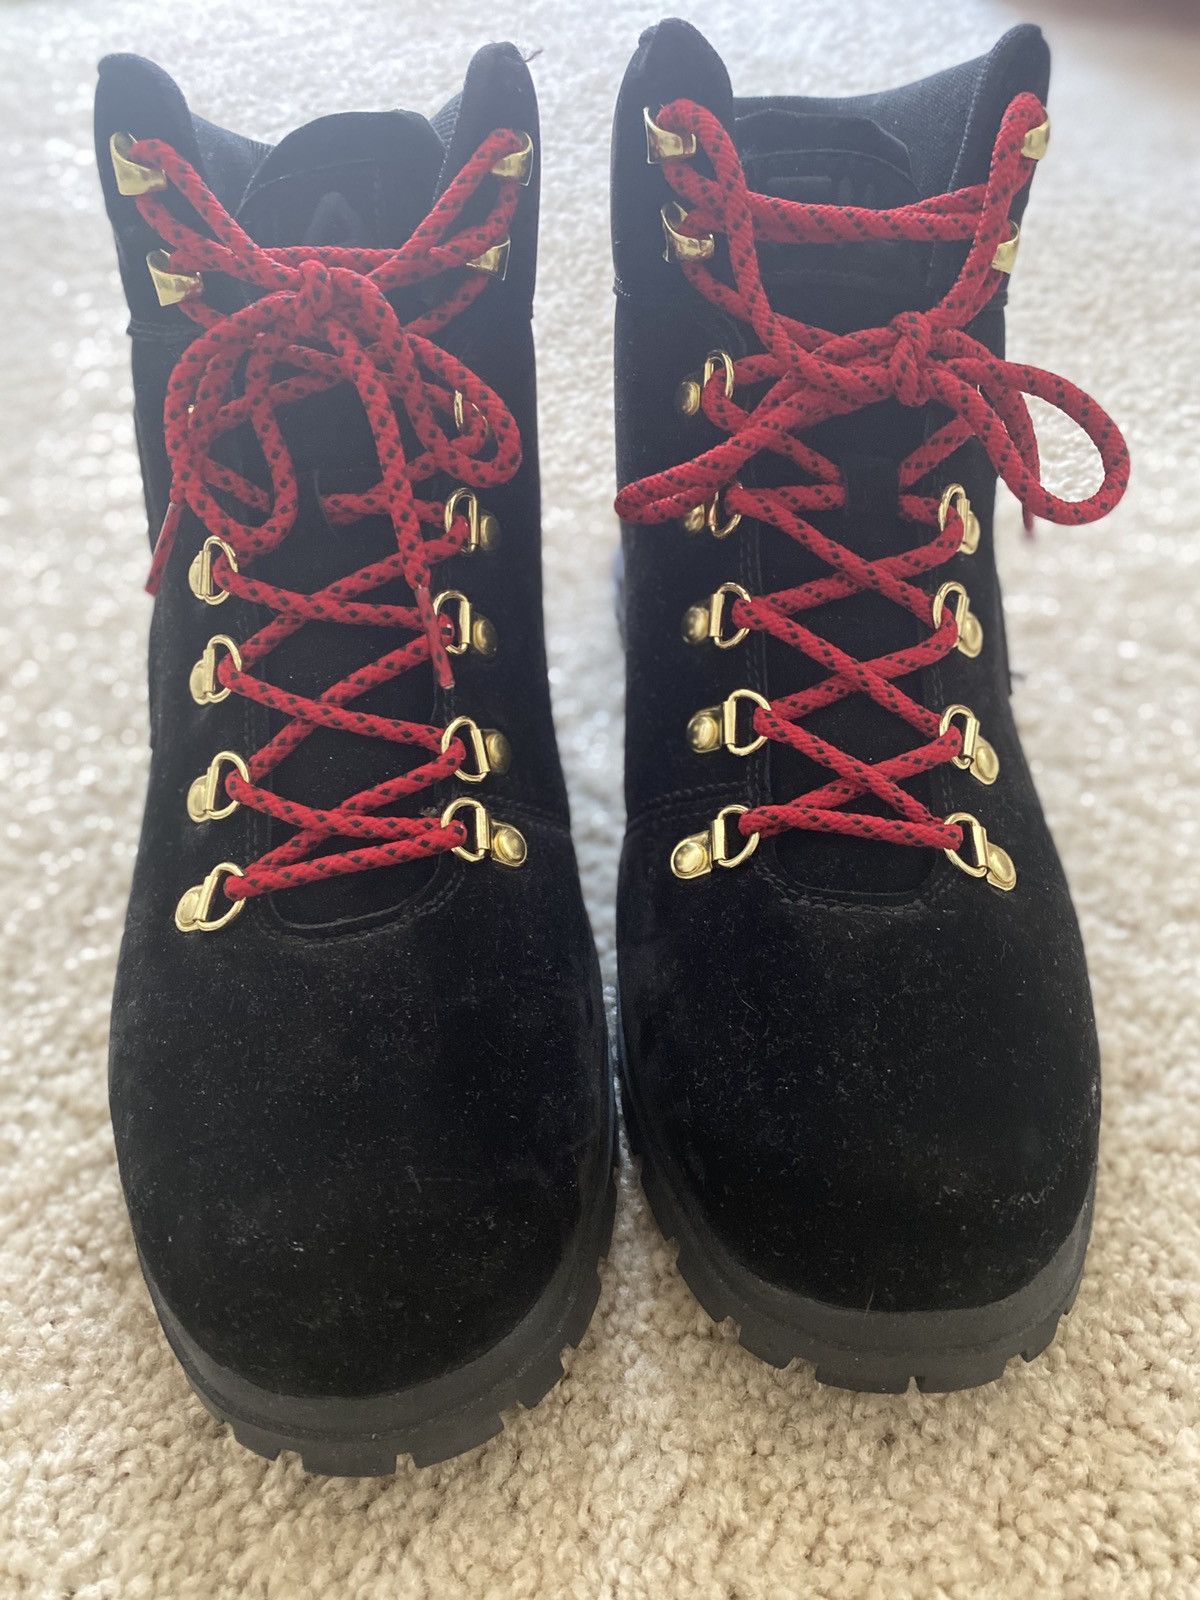 Fila Men’s Suede Fila Hiking Boots Size US 11.5 / EU 44-45 - 2 Preview